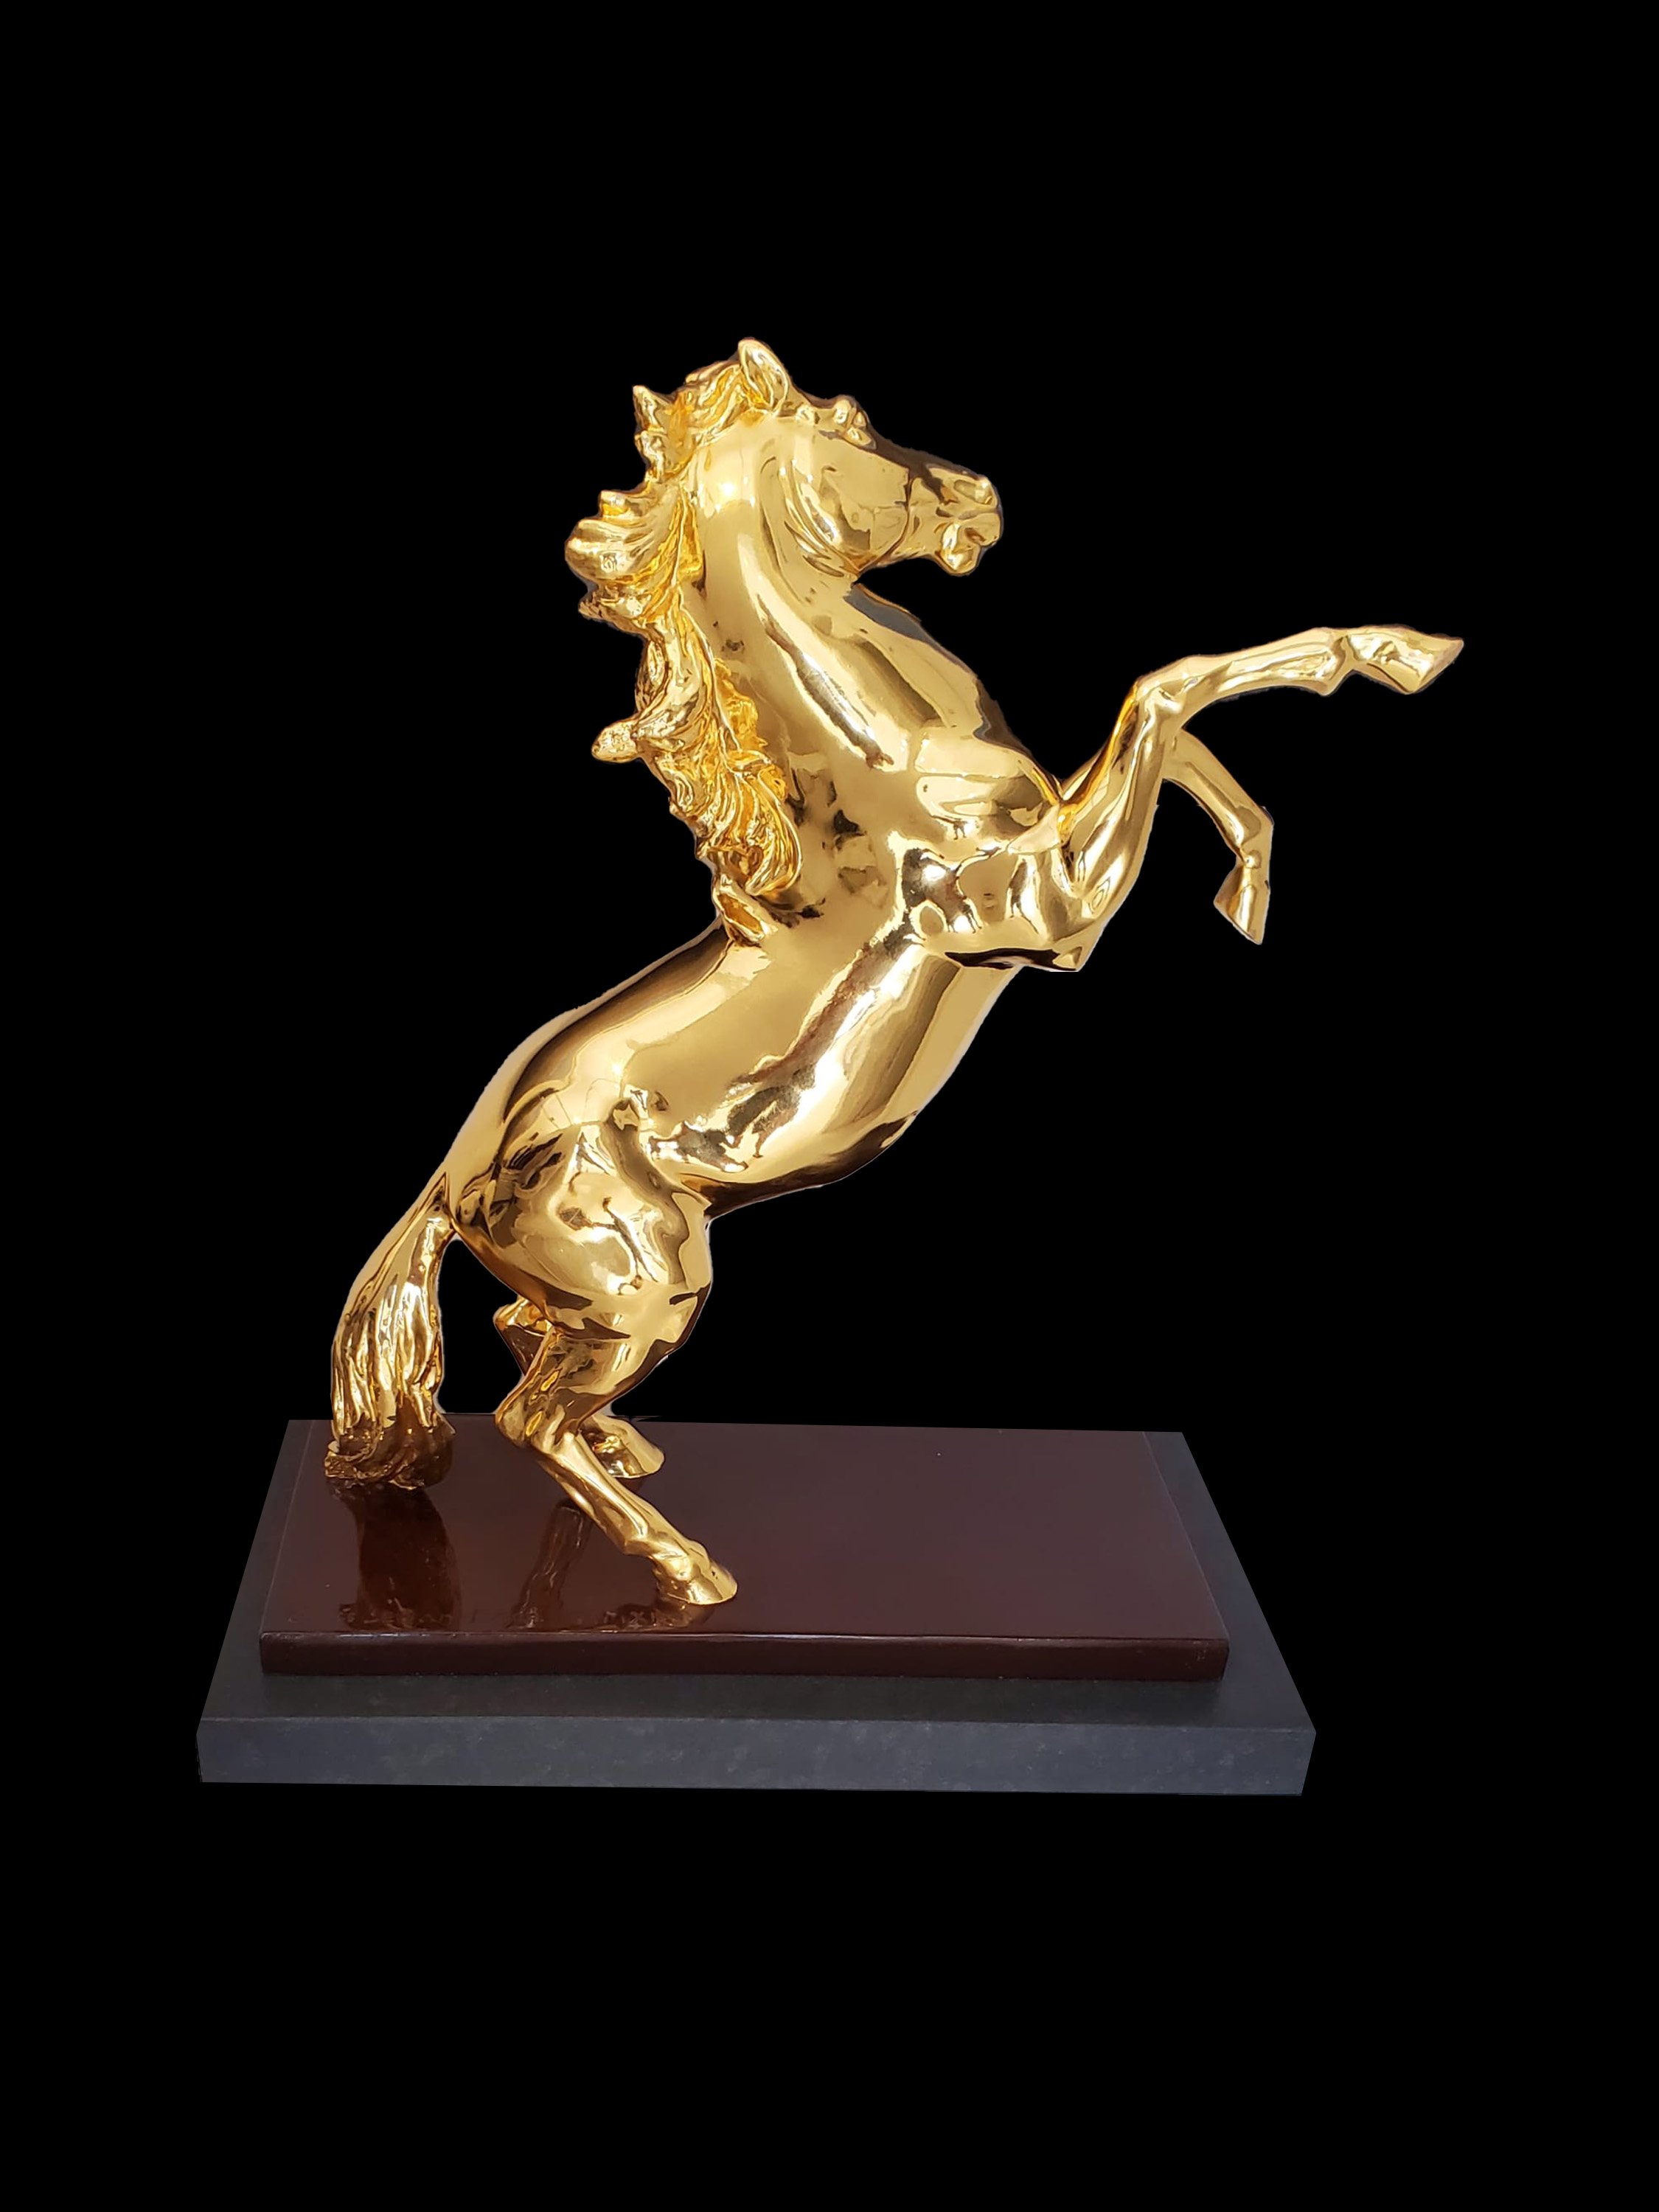 Golden Horse Caballo dorado gines serran pagan oscar molina gallery new york fine art southampton ny hamptons 2.jpg